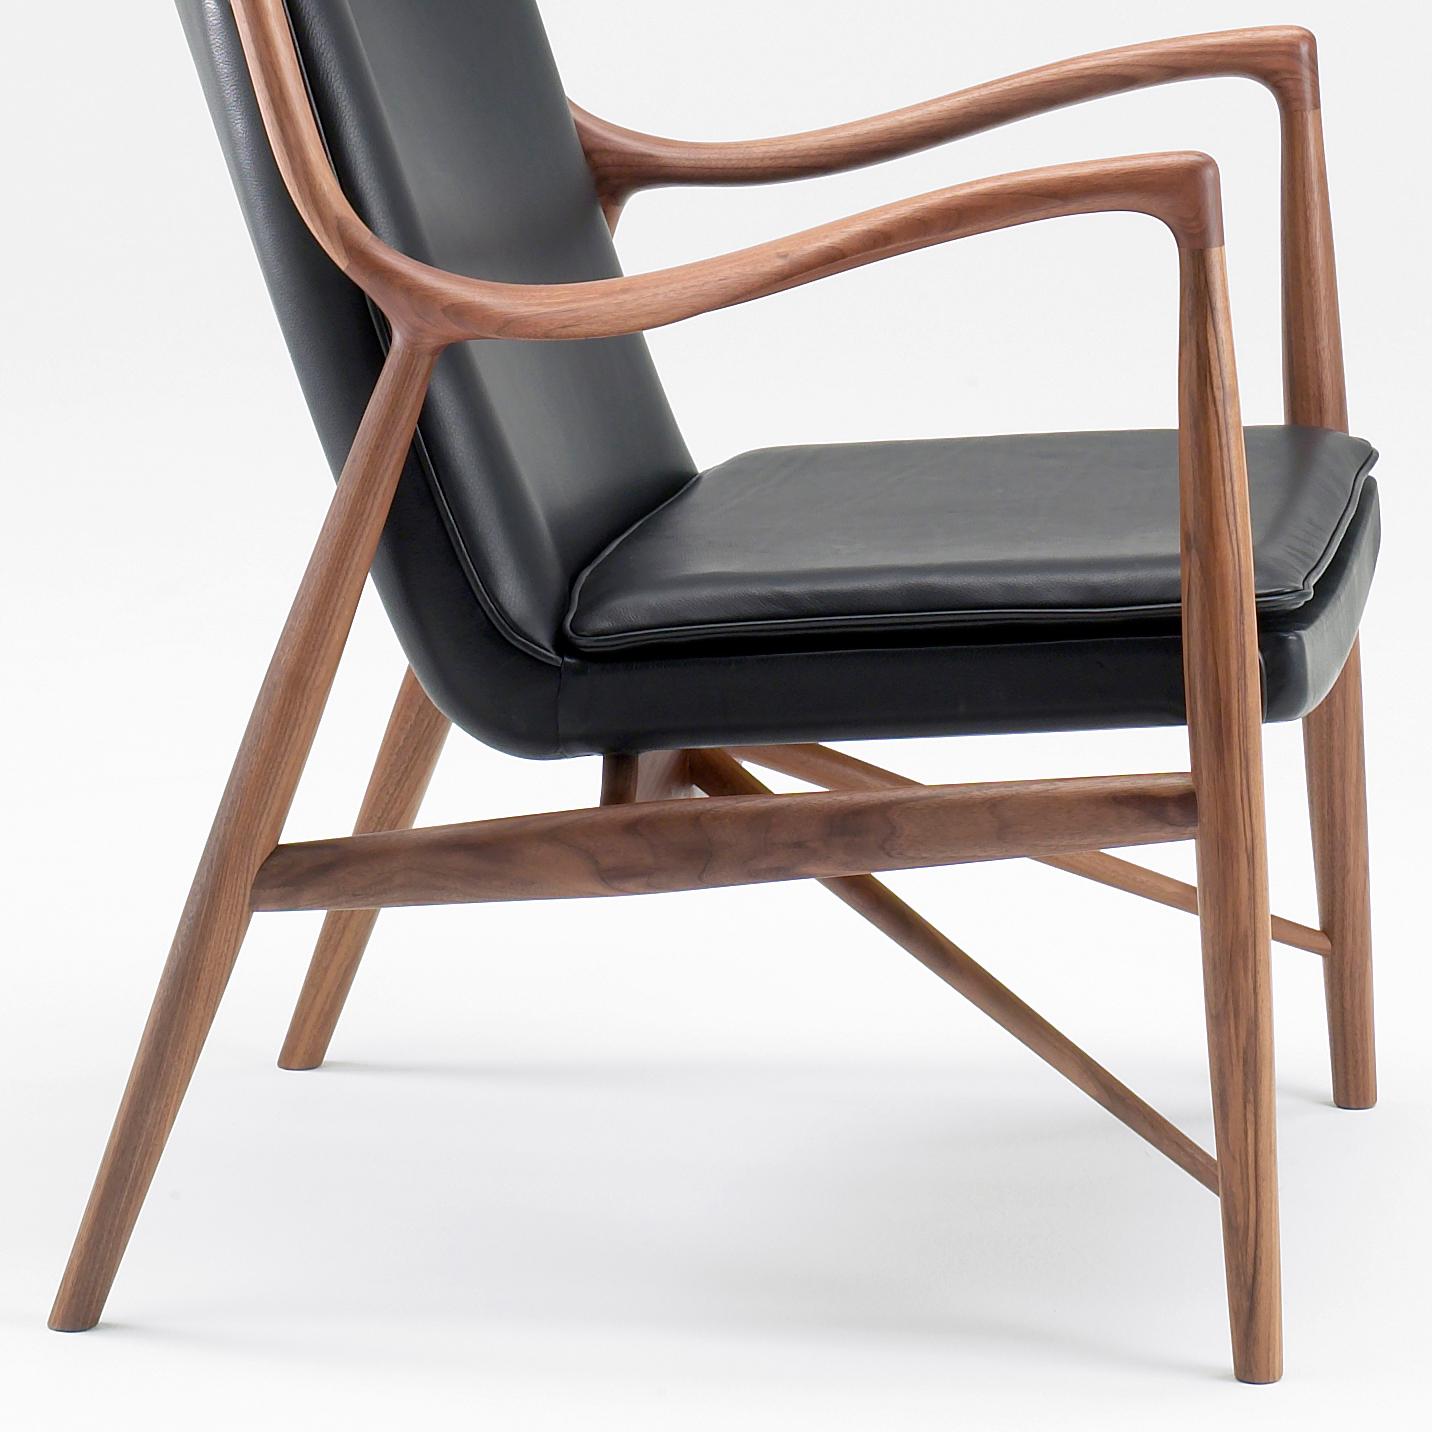 Danish Finn Juhl 45 Chair, Wood and Black Leather